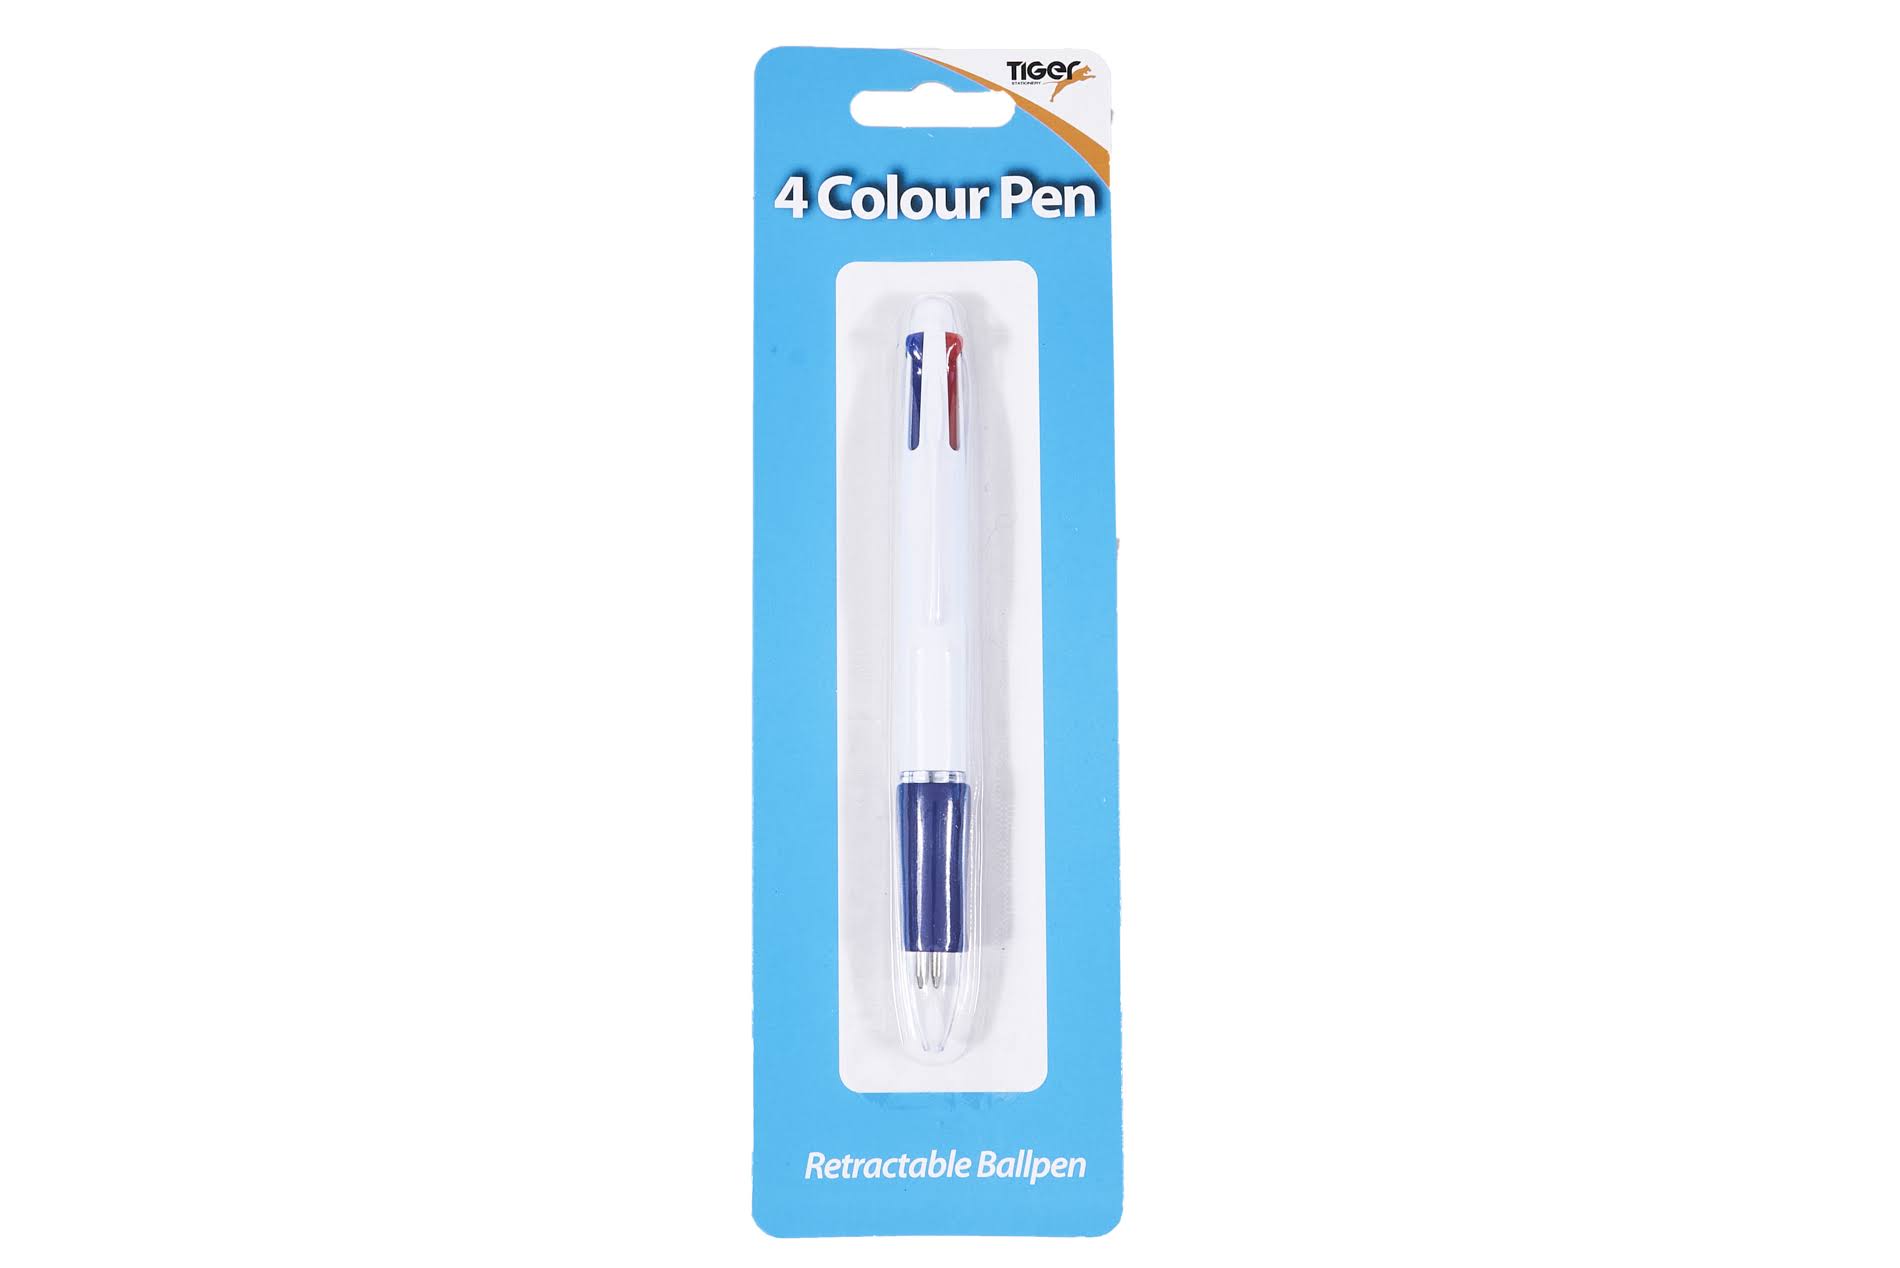 Tiger Retractable Pen - 4 Colour